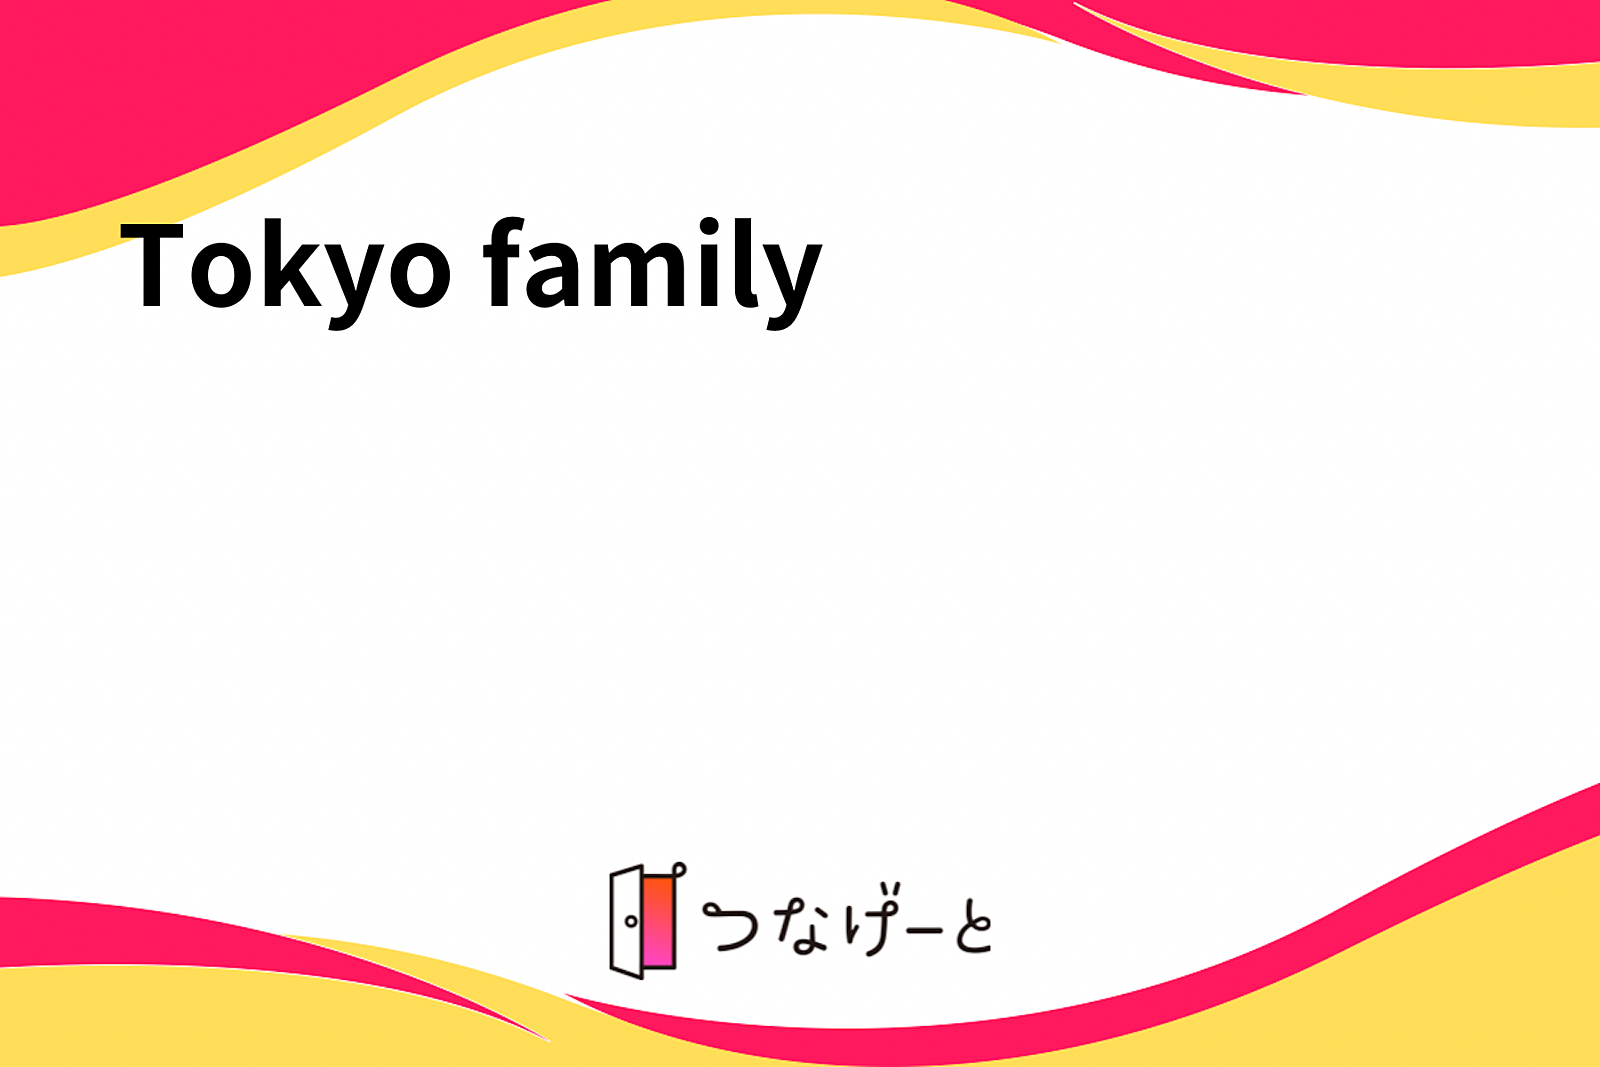 Tokyo family